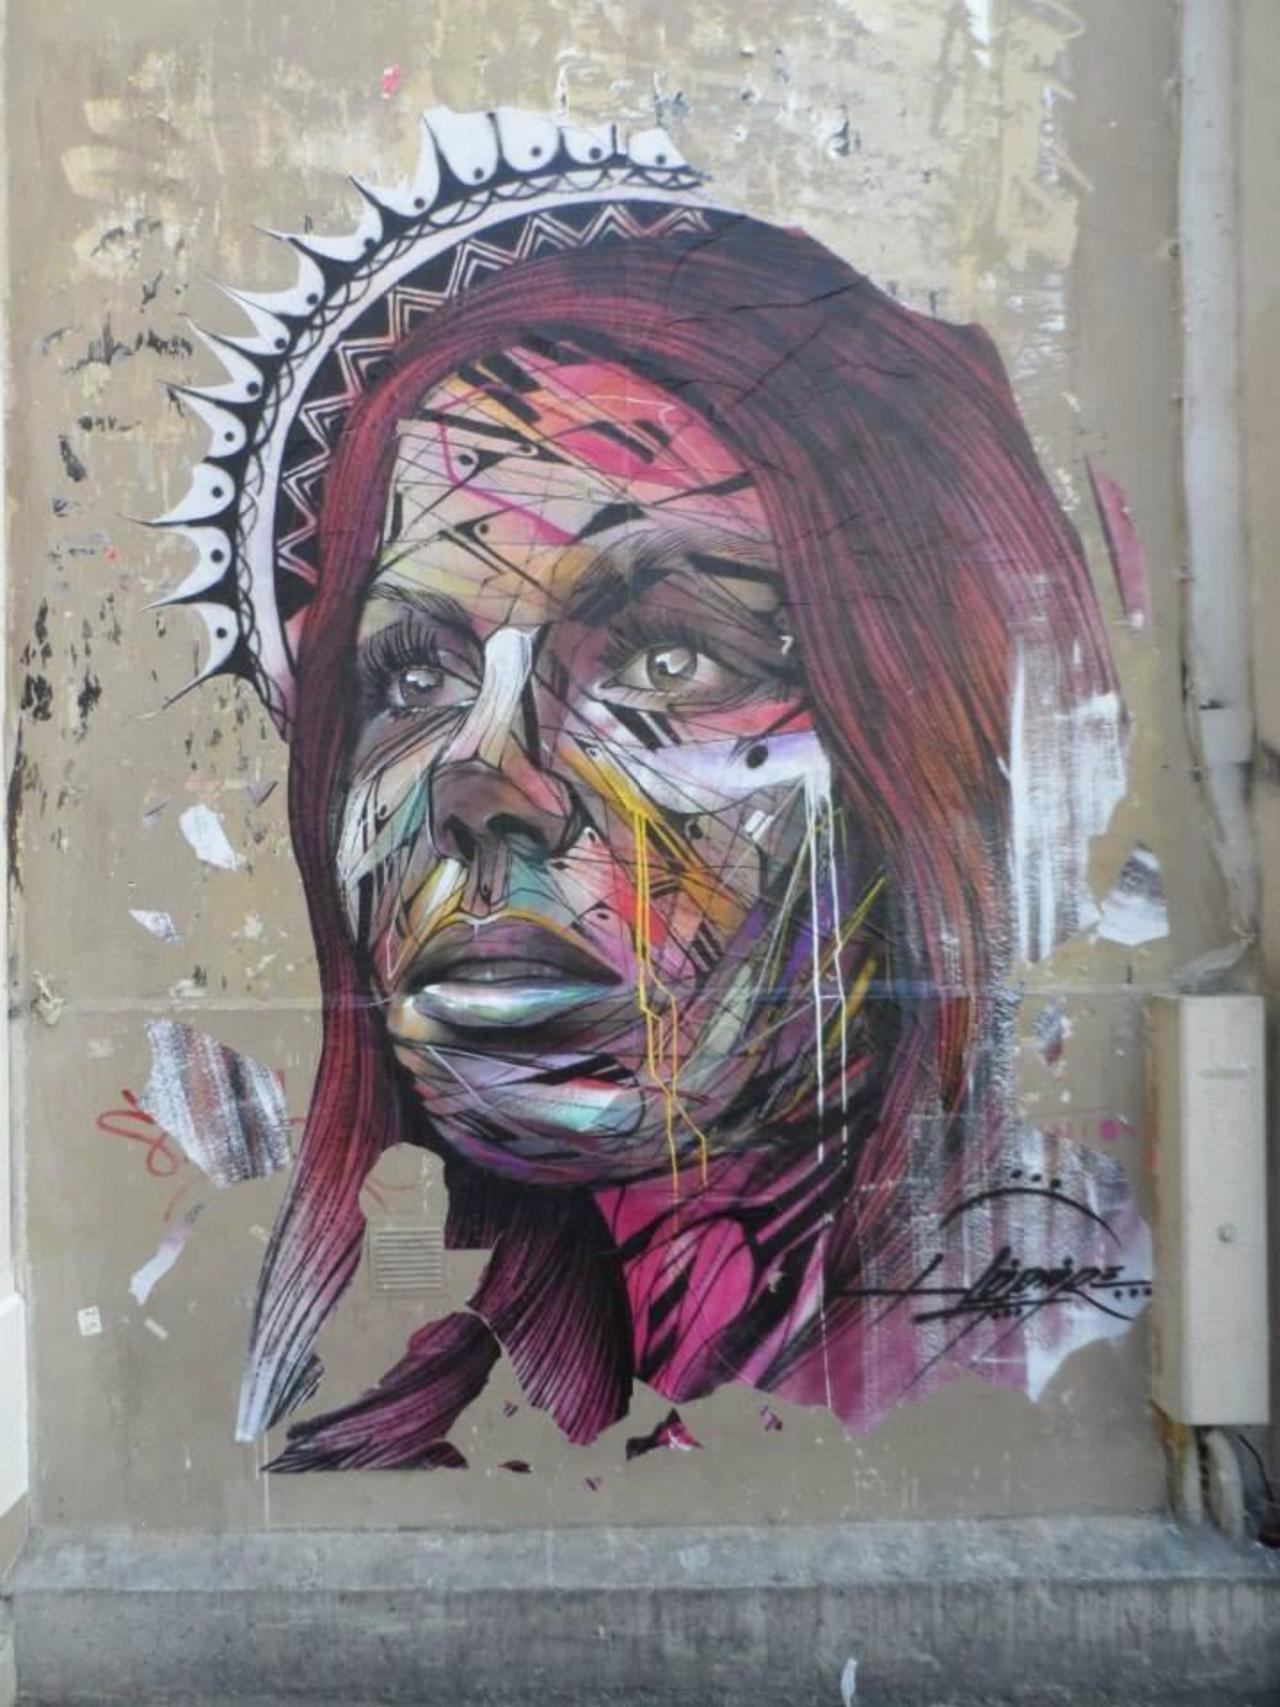 RT @designopinion: Artist Hopare new signature Street Art portrait located in Paris, France #art #mural #graffiti #streetart http://t.co/gofyMB52lP